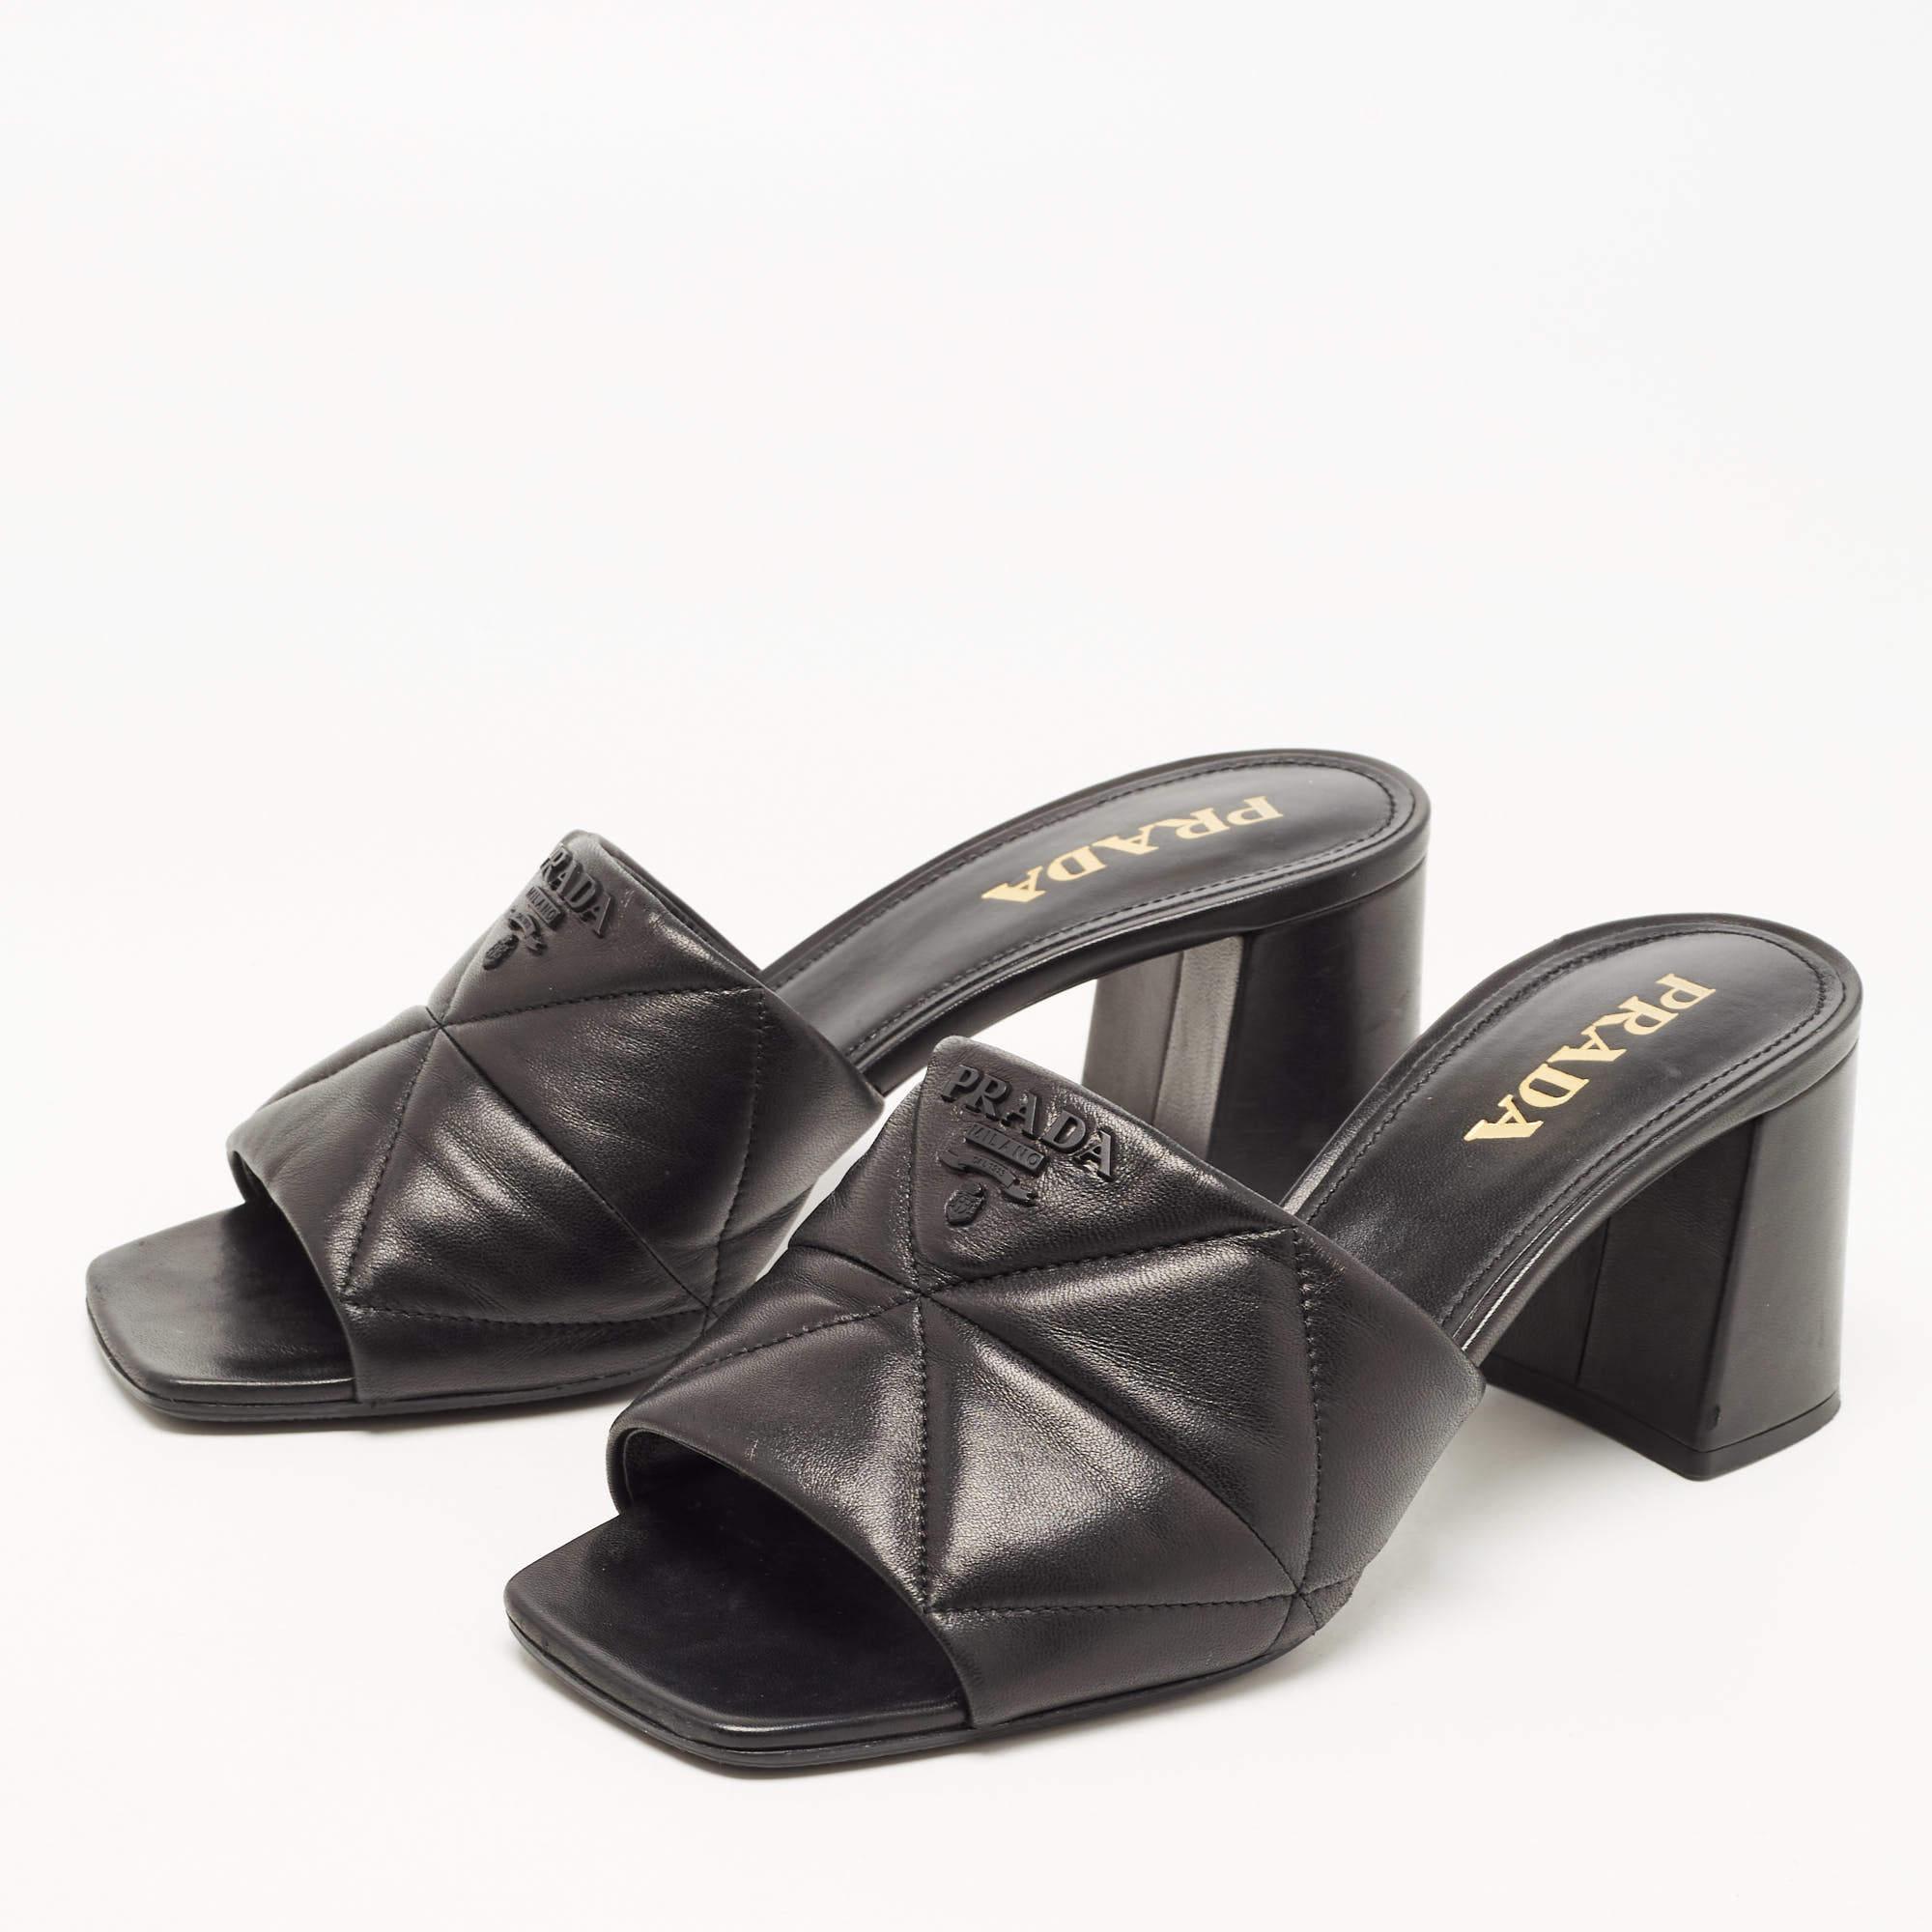 Prada Black Quilted Leather Slide Sandals Size 39 4